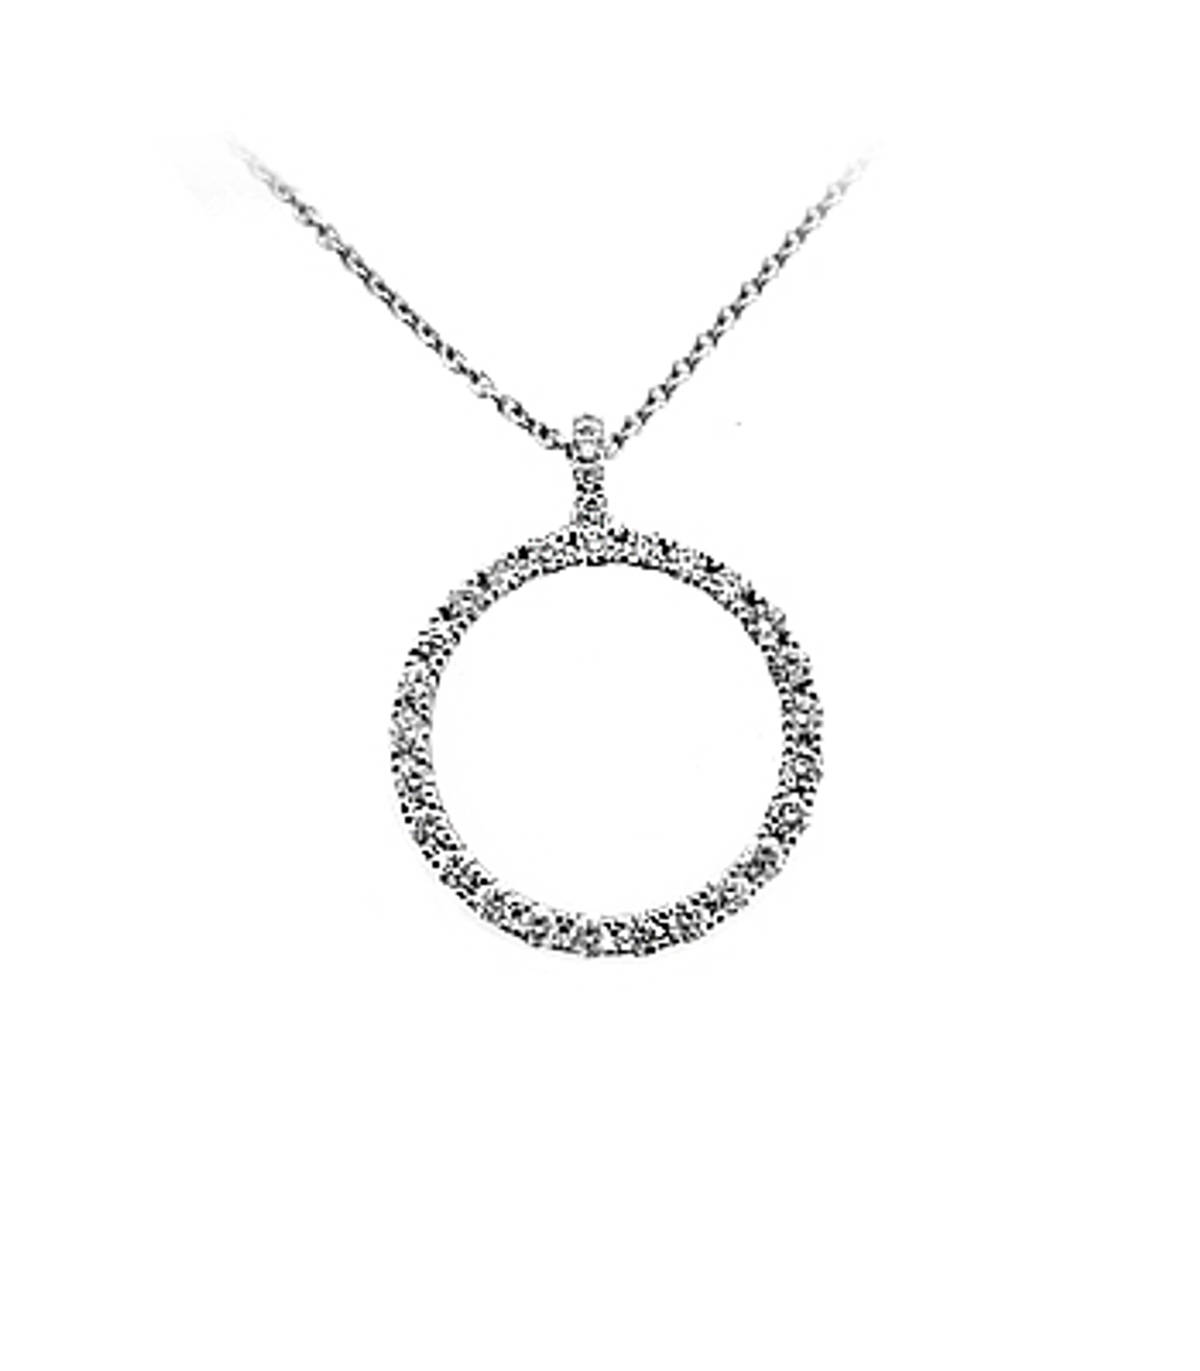 18 carat white gold pendant with 0.65cts diamonds.